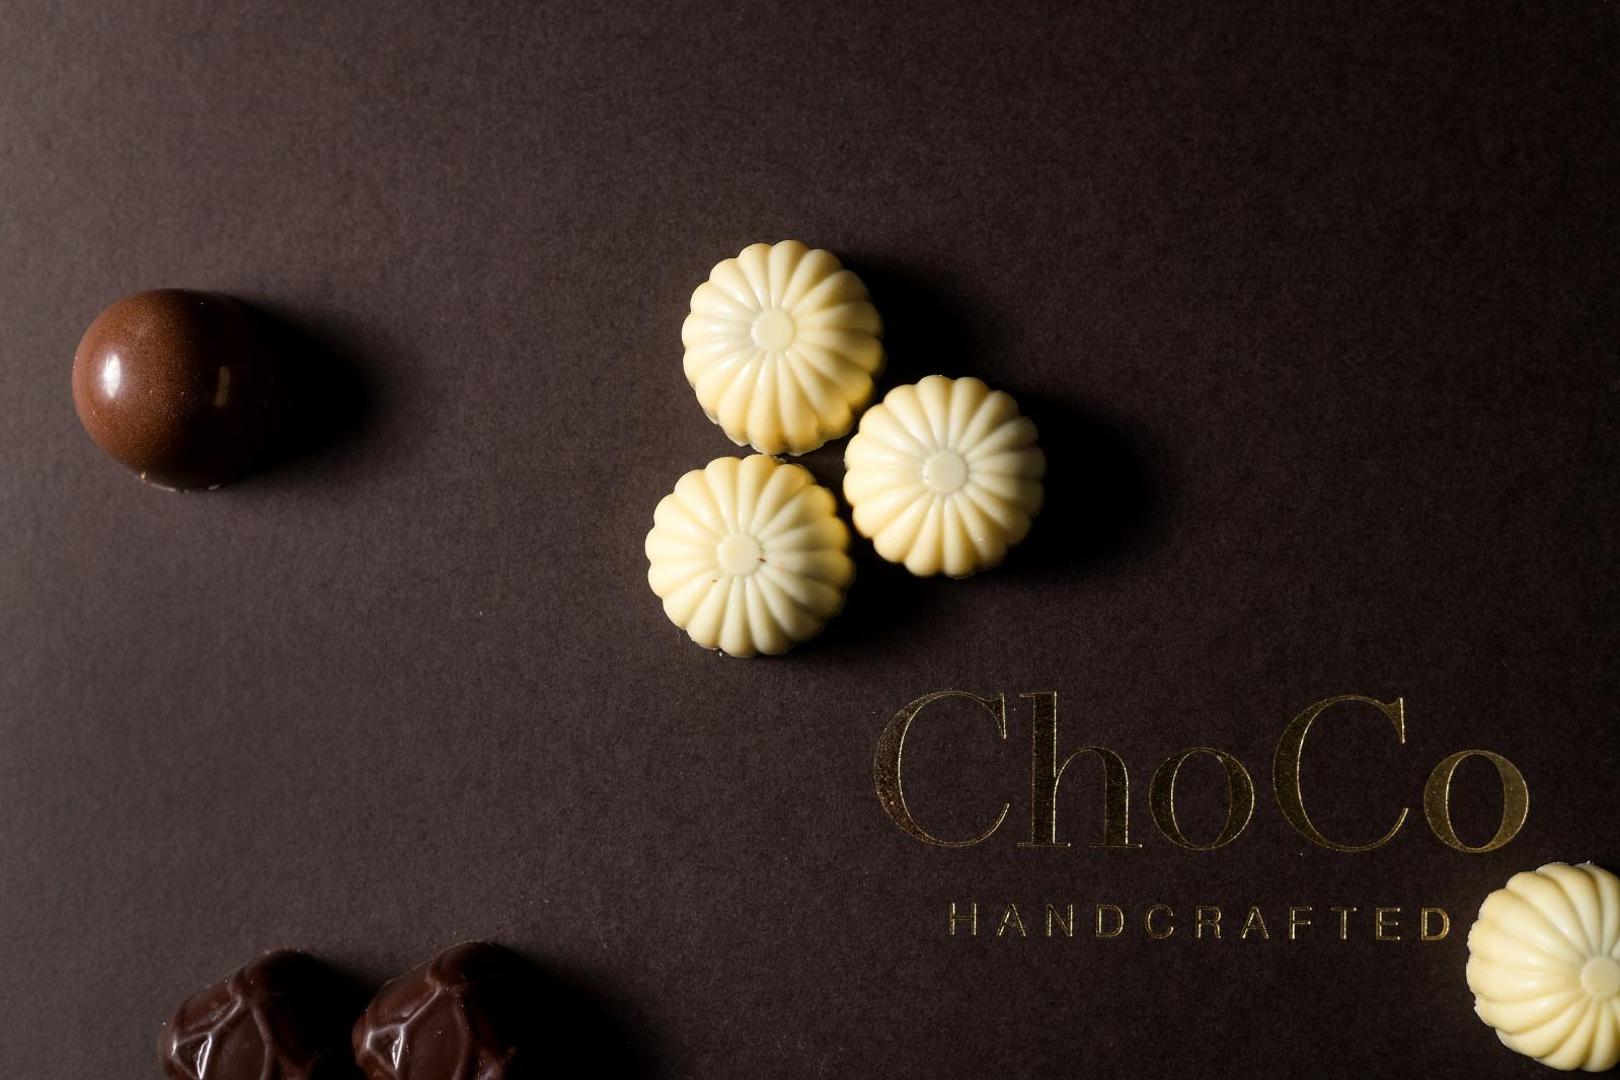 19.12.2020., Zagreb - Dragutin i Marcela Markovic Halkic pokrenuli su brand ChoCo cokoladnih proizvoda. 
Photo: Sandra Simunovic/PIXSELL